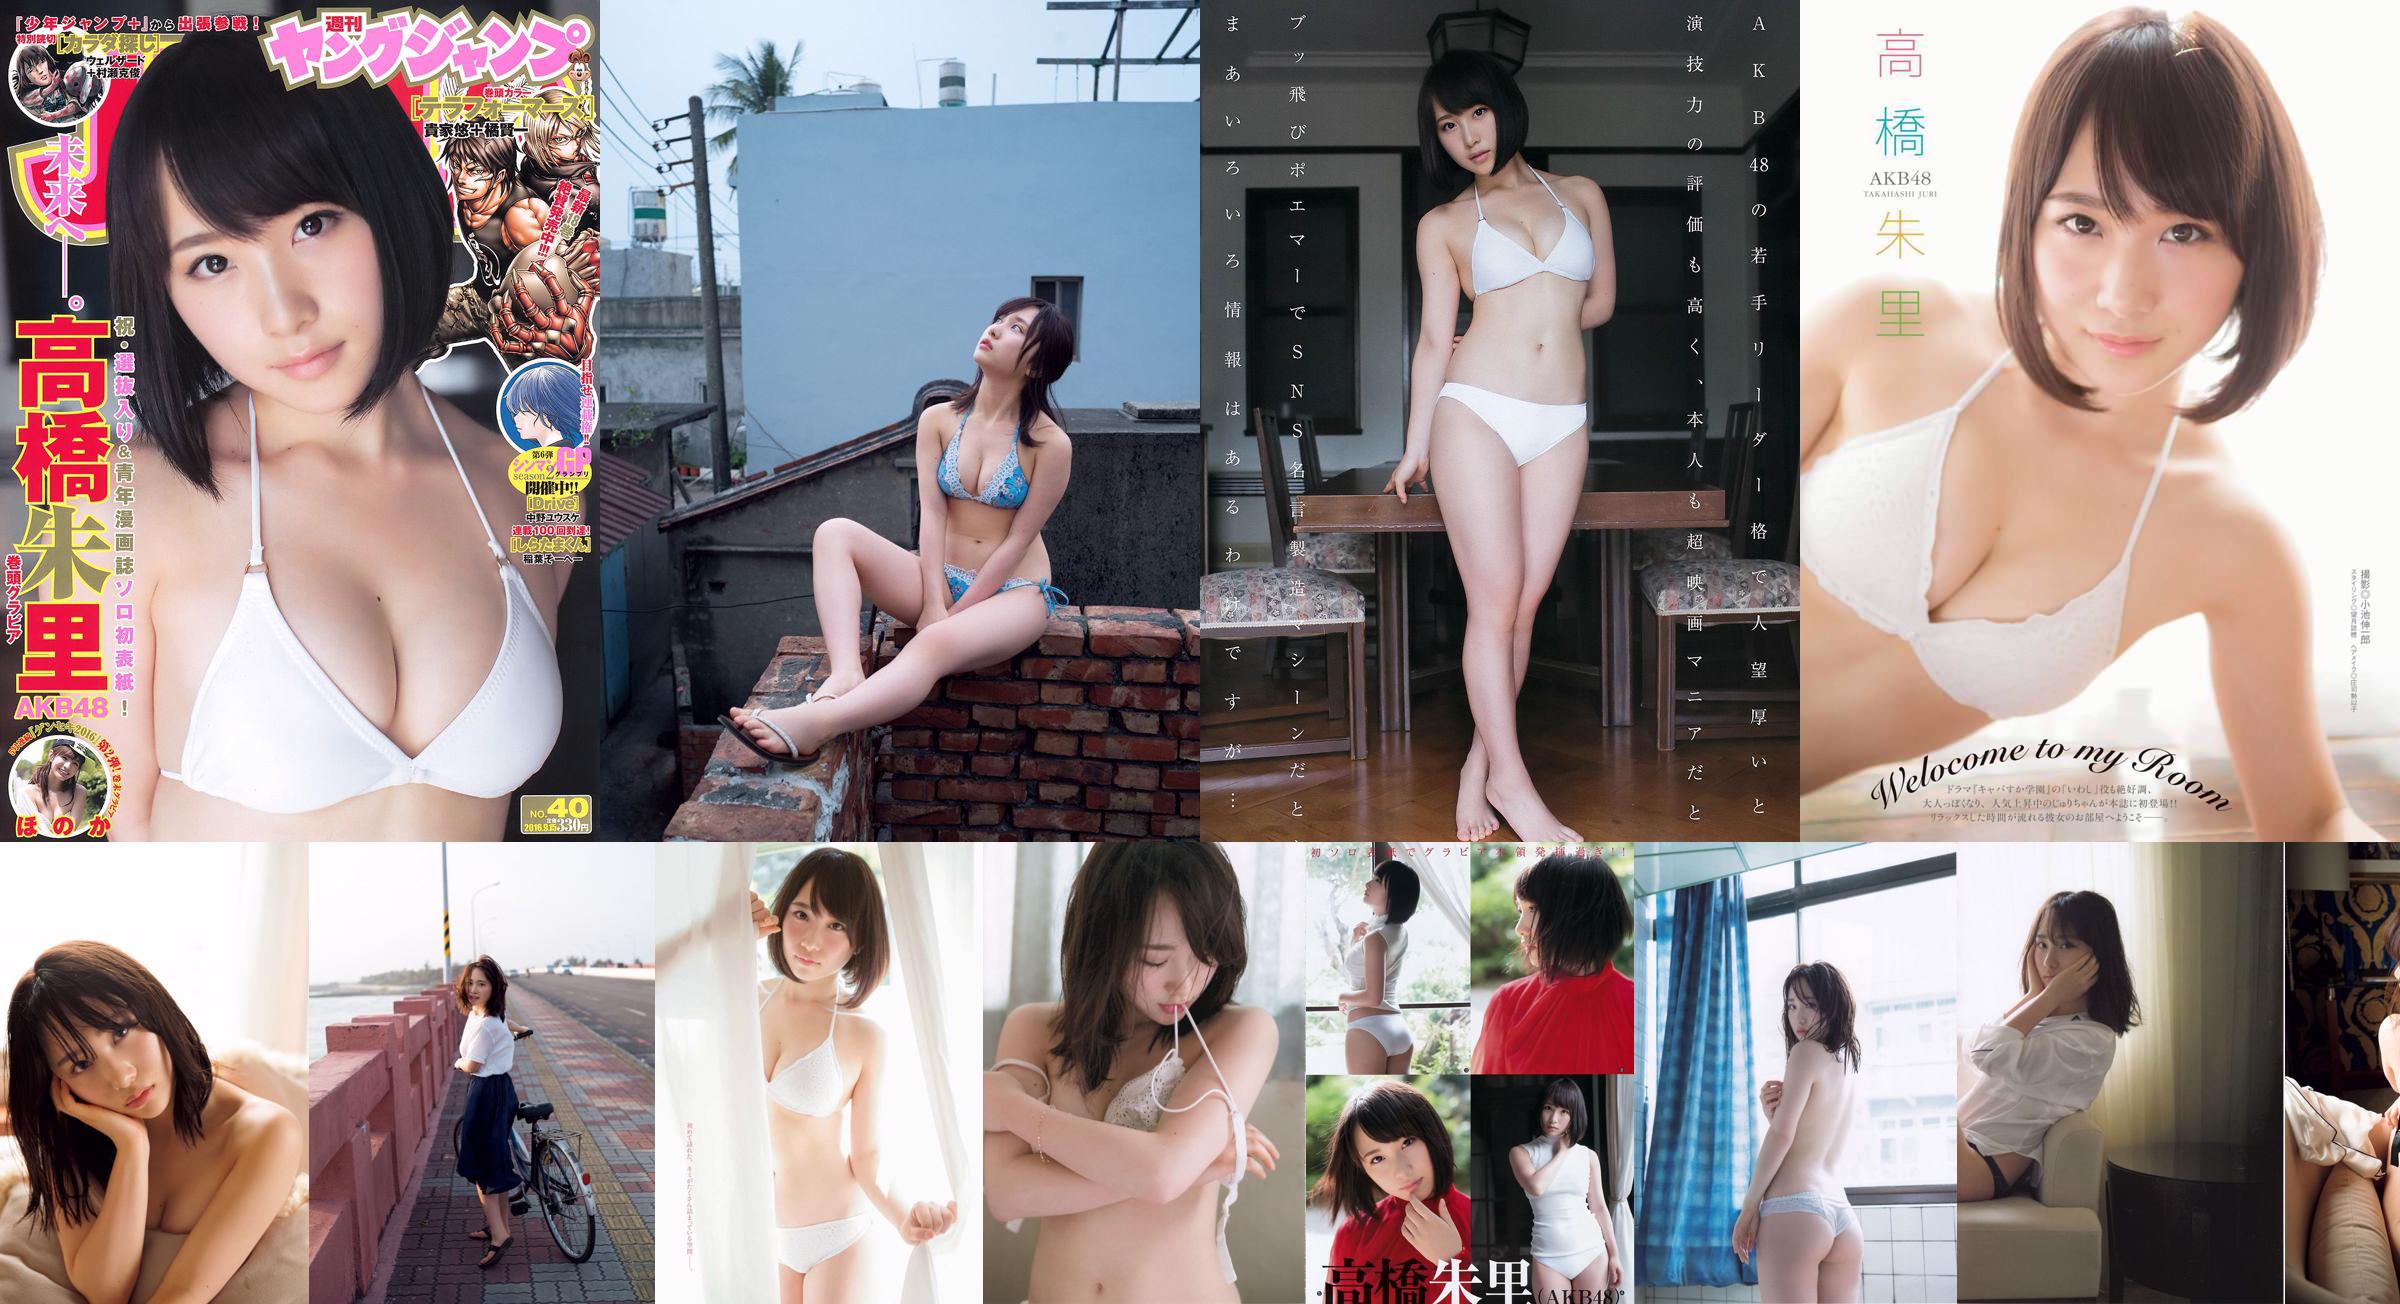 [VRIJDAG] Takahashi Juri "AKB48's" Beauty Bust "" foto No.682531 Pagina 1